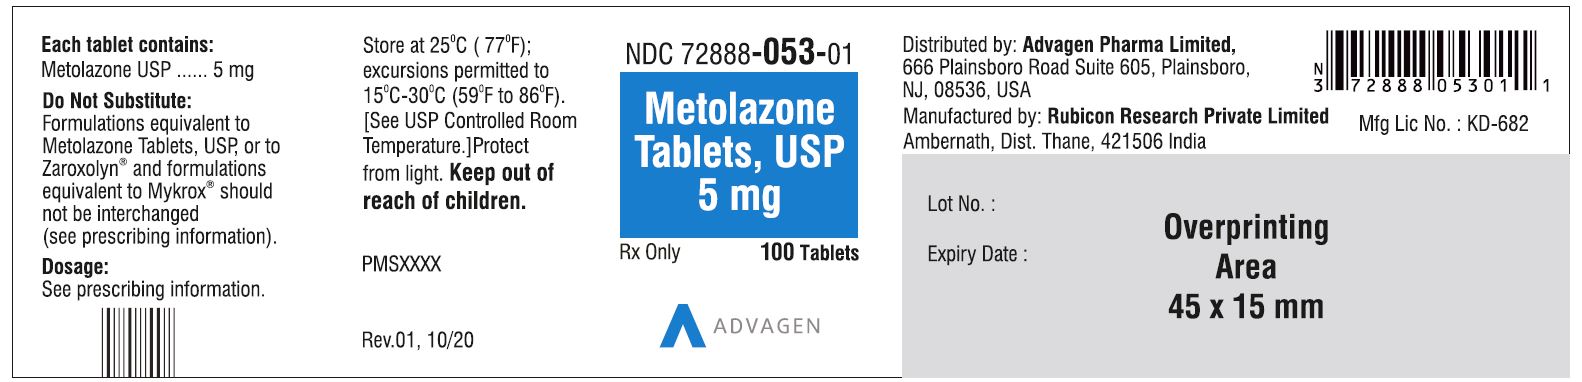 Metolazone Tablets USP, 5mg - NDC: <a href=/NDC/72888-053-01>72888-053-01</a> - 100 Tablets Bottle Label